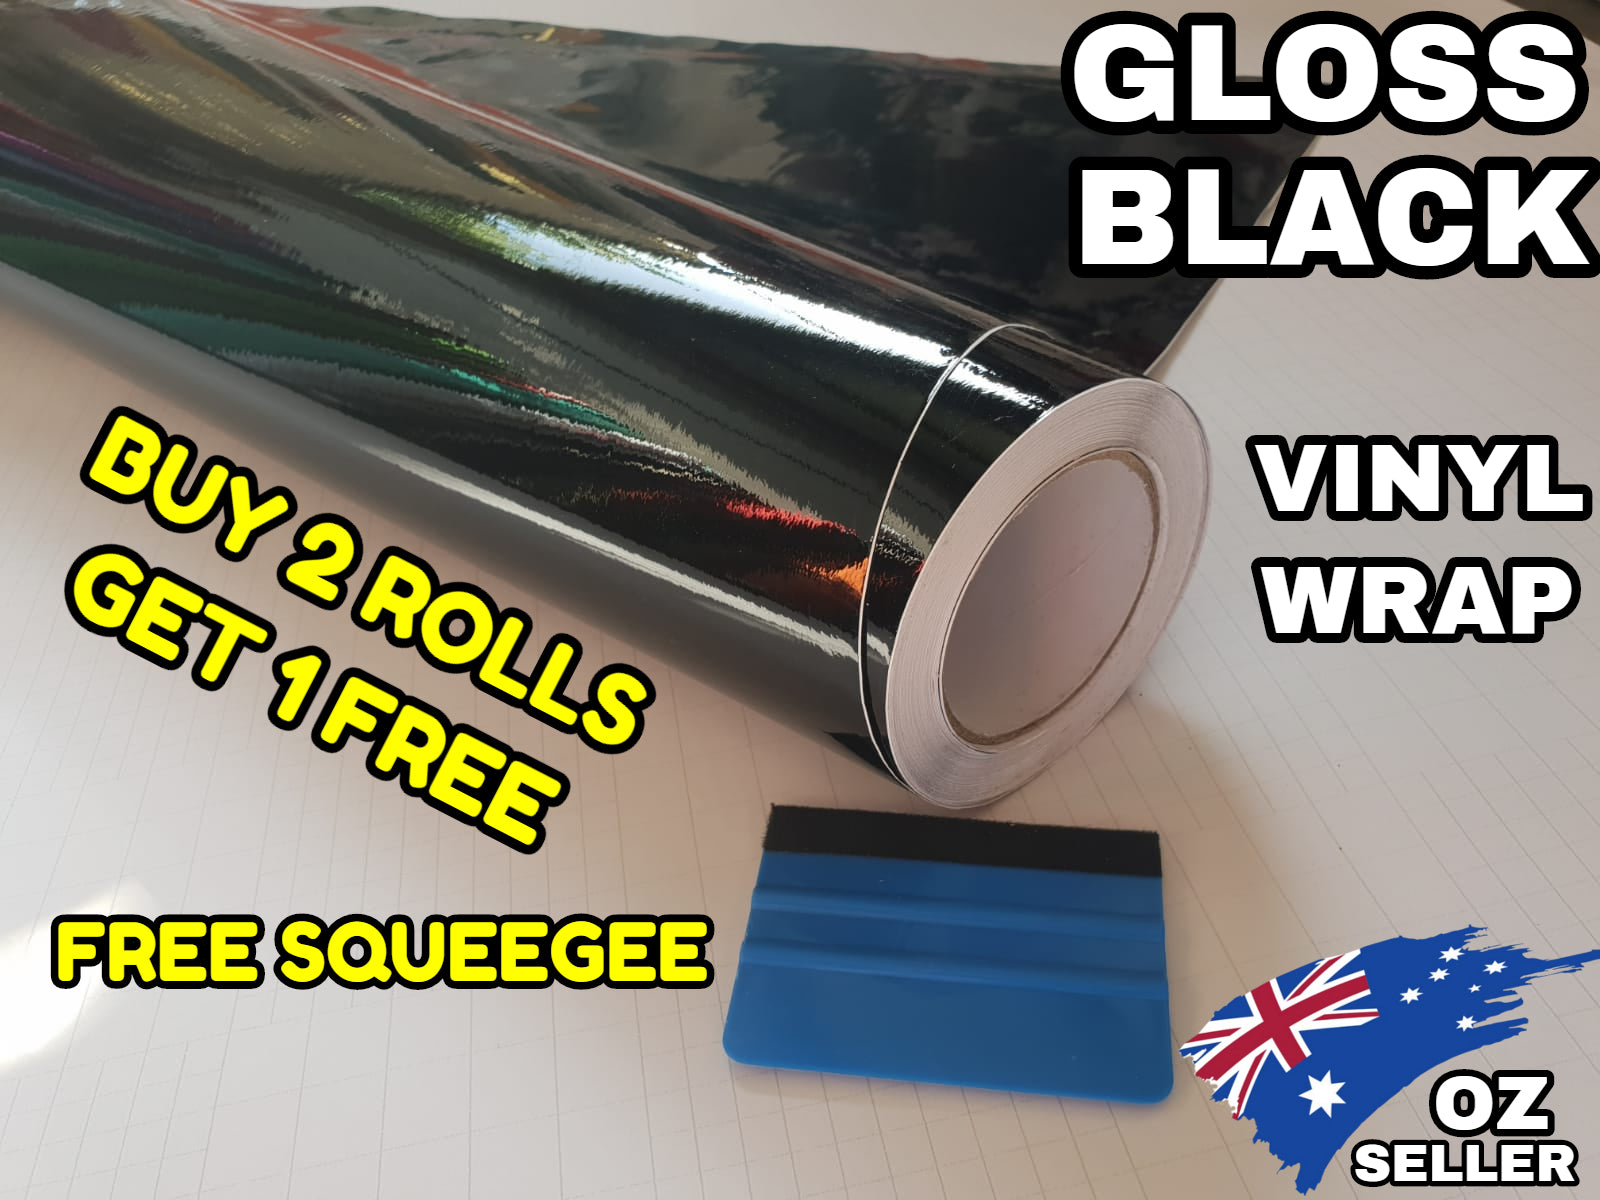 BUY 2 Rolls Get 1 FREE Gloss Black Car Vinyl Wrap FilmAir Release